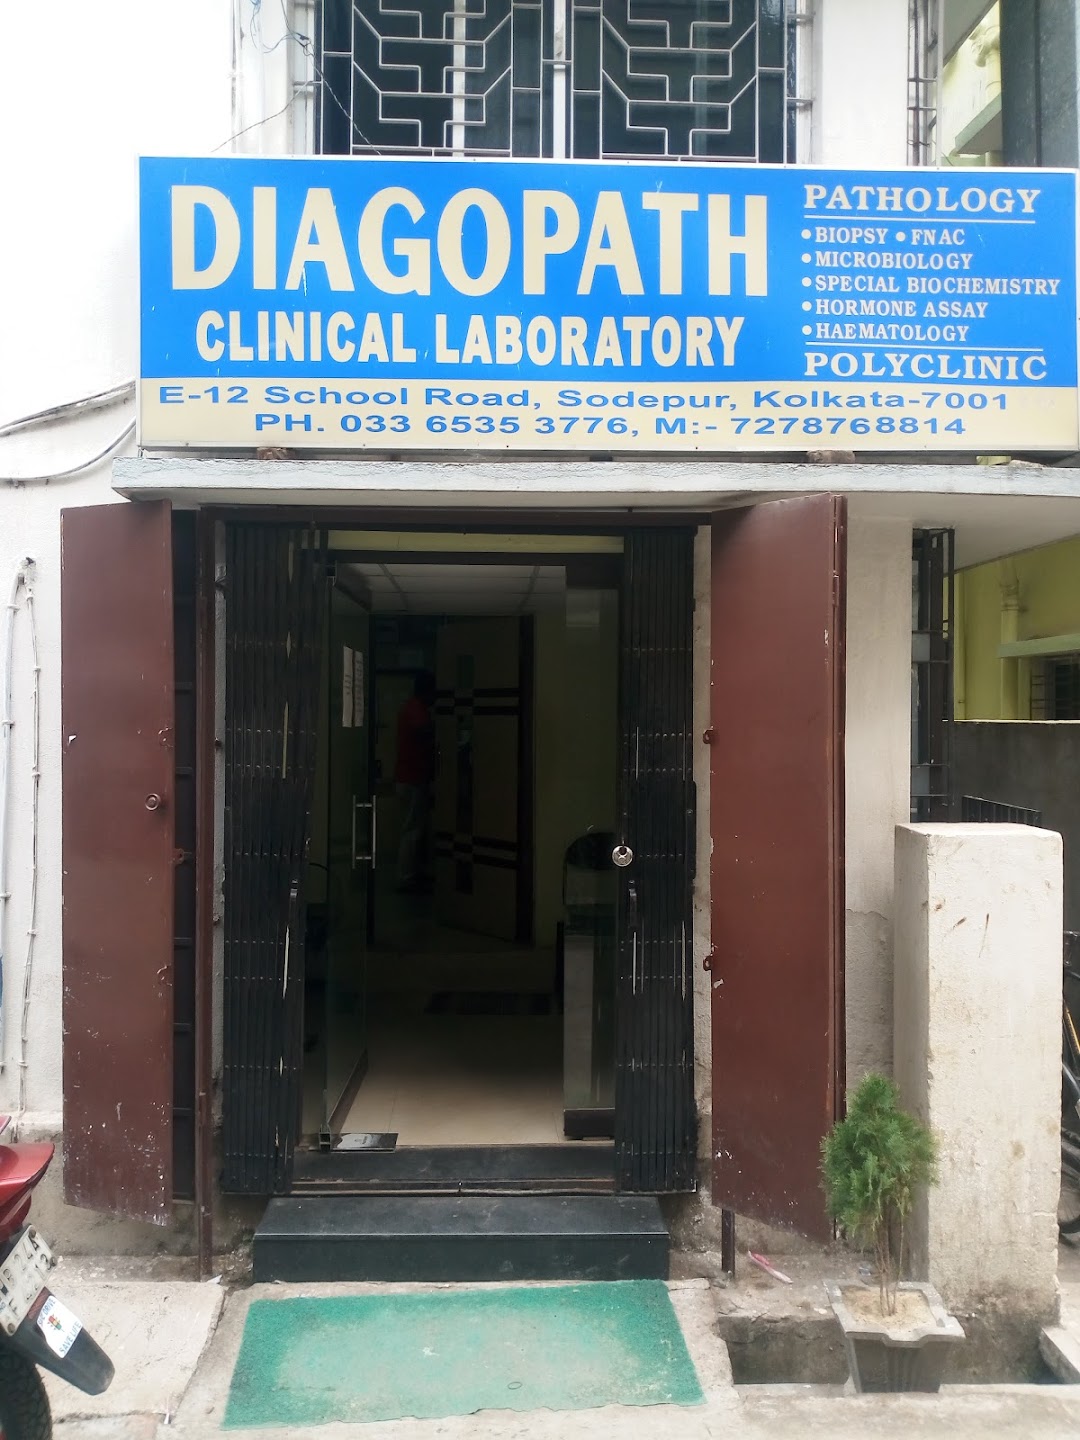 Diagopath Clinical Laboratory